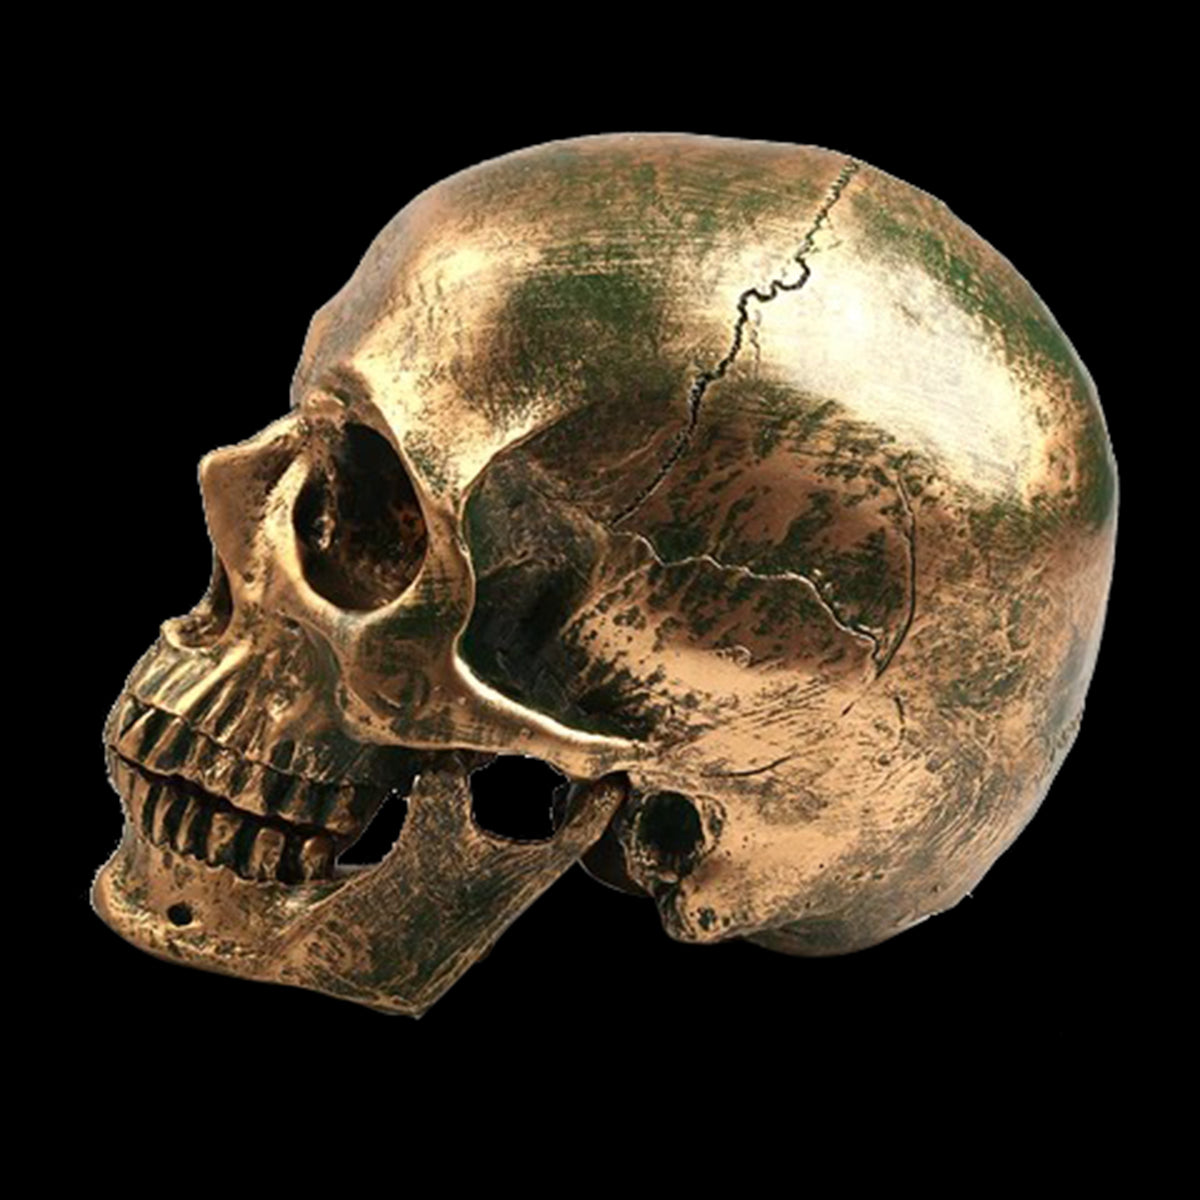 Decorative Human Skull | Best Human Skull | Human Skull Decor